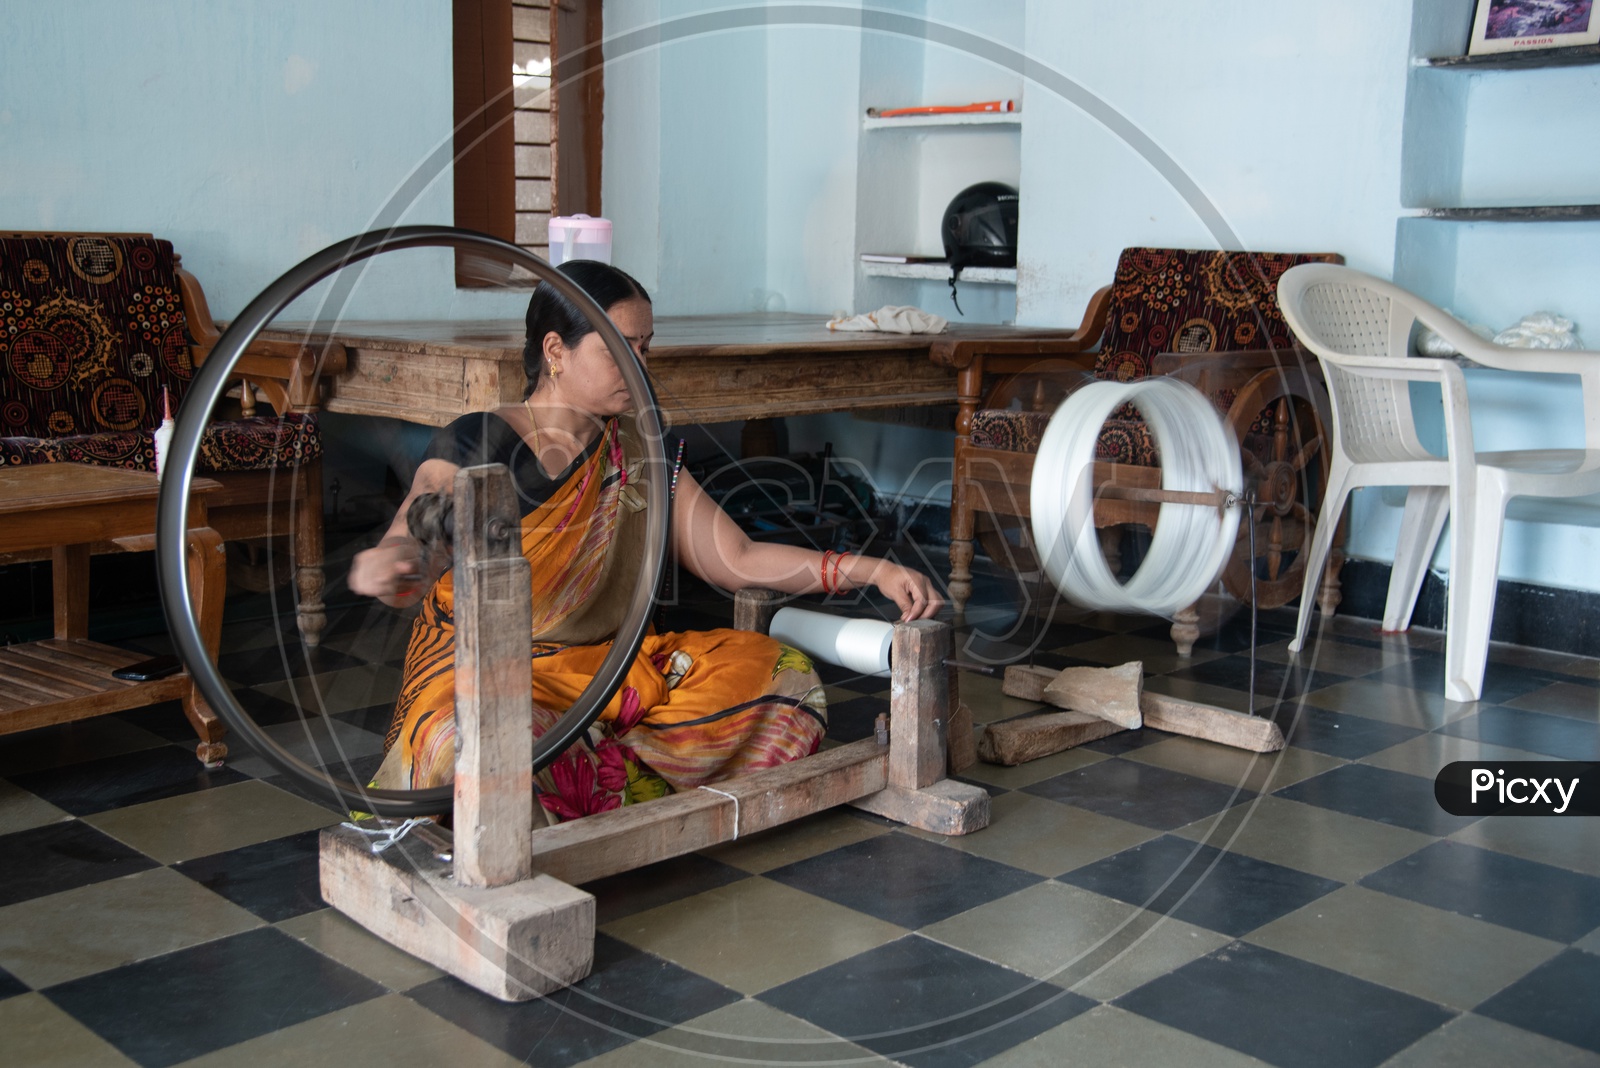 Making thread for weaving on Spinning wheel (Charkha)